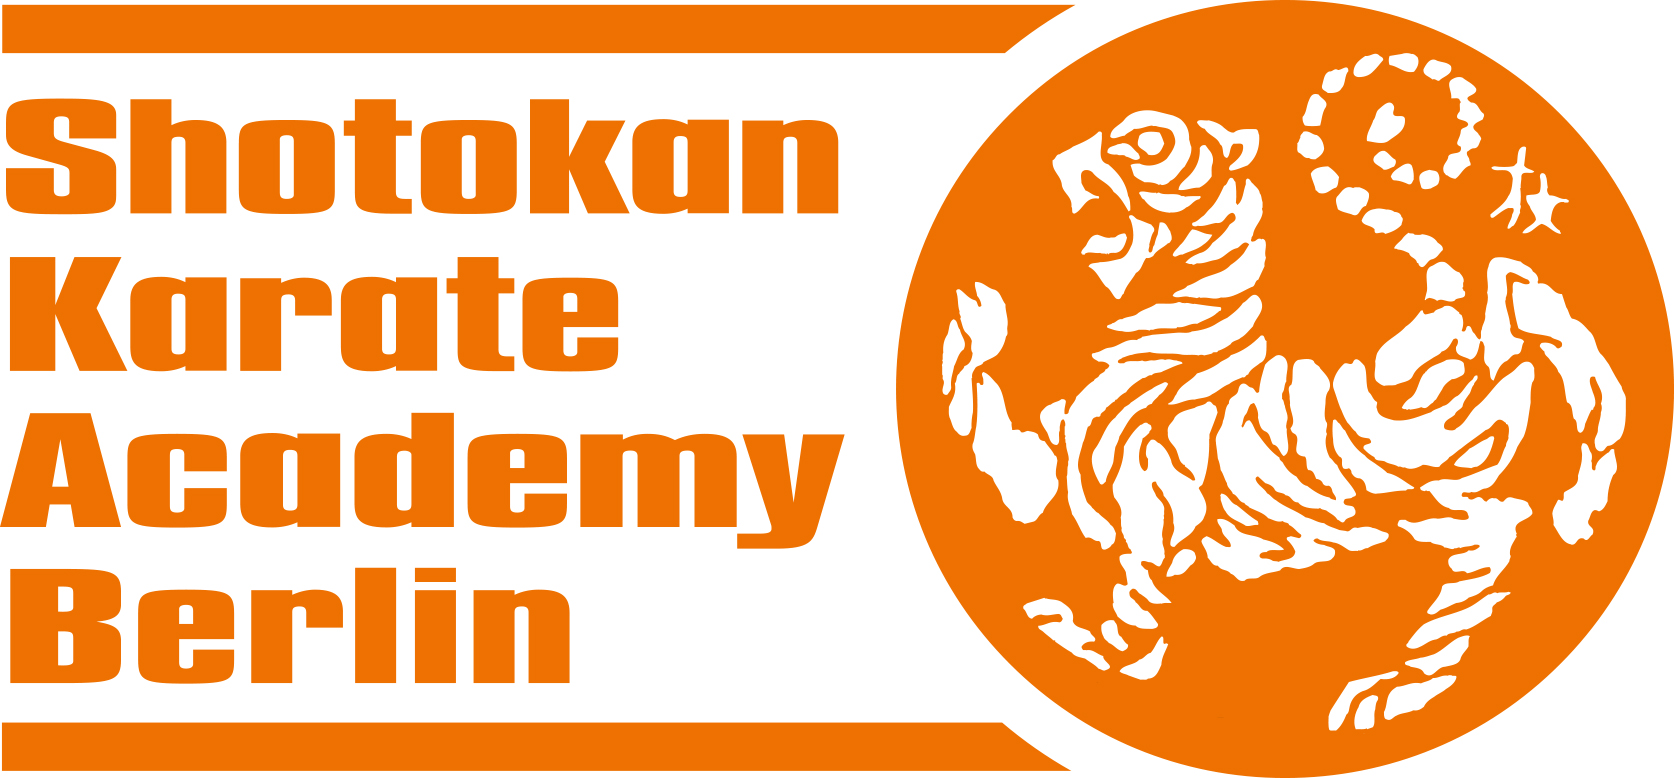 (c) Shotokan-karate-academy-berlin.com